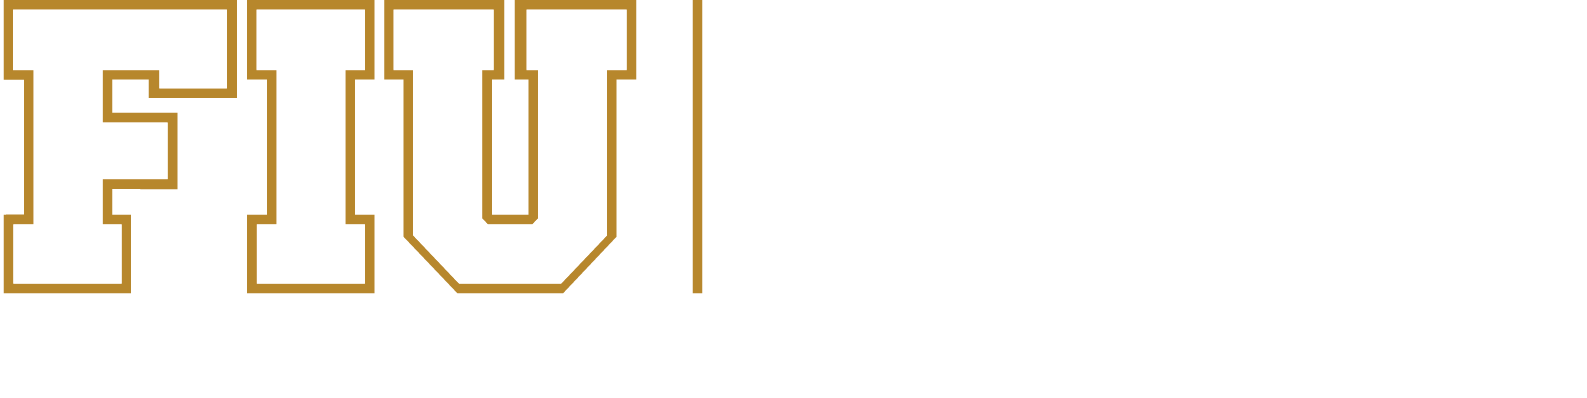 Hollo-Real-Estate-hrz-FIU-Color-rev